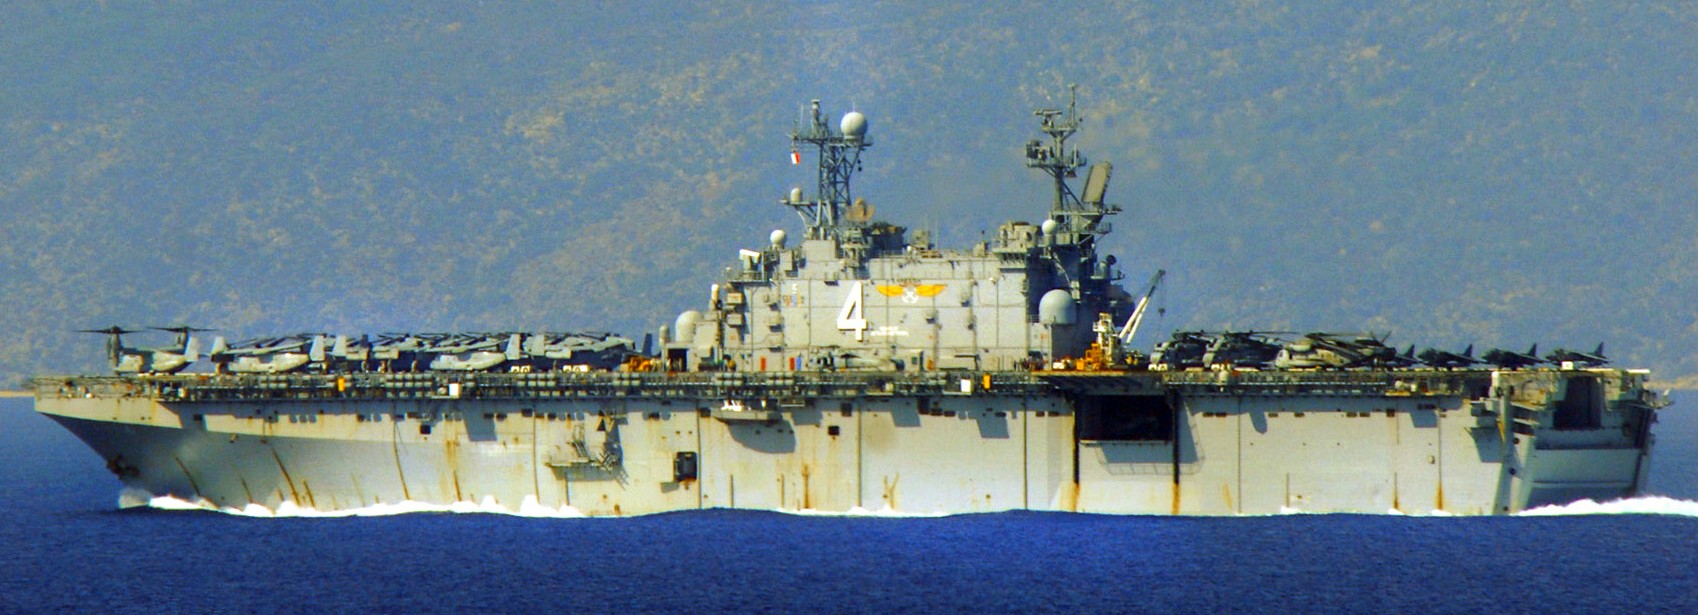 lha-4 uss nassau tarawa class amphibious assault ship us navy 52